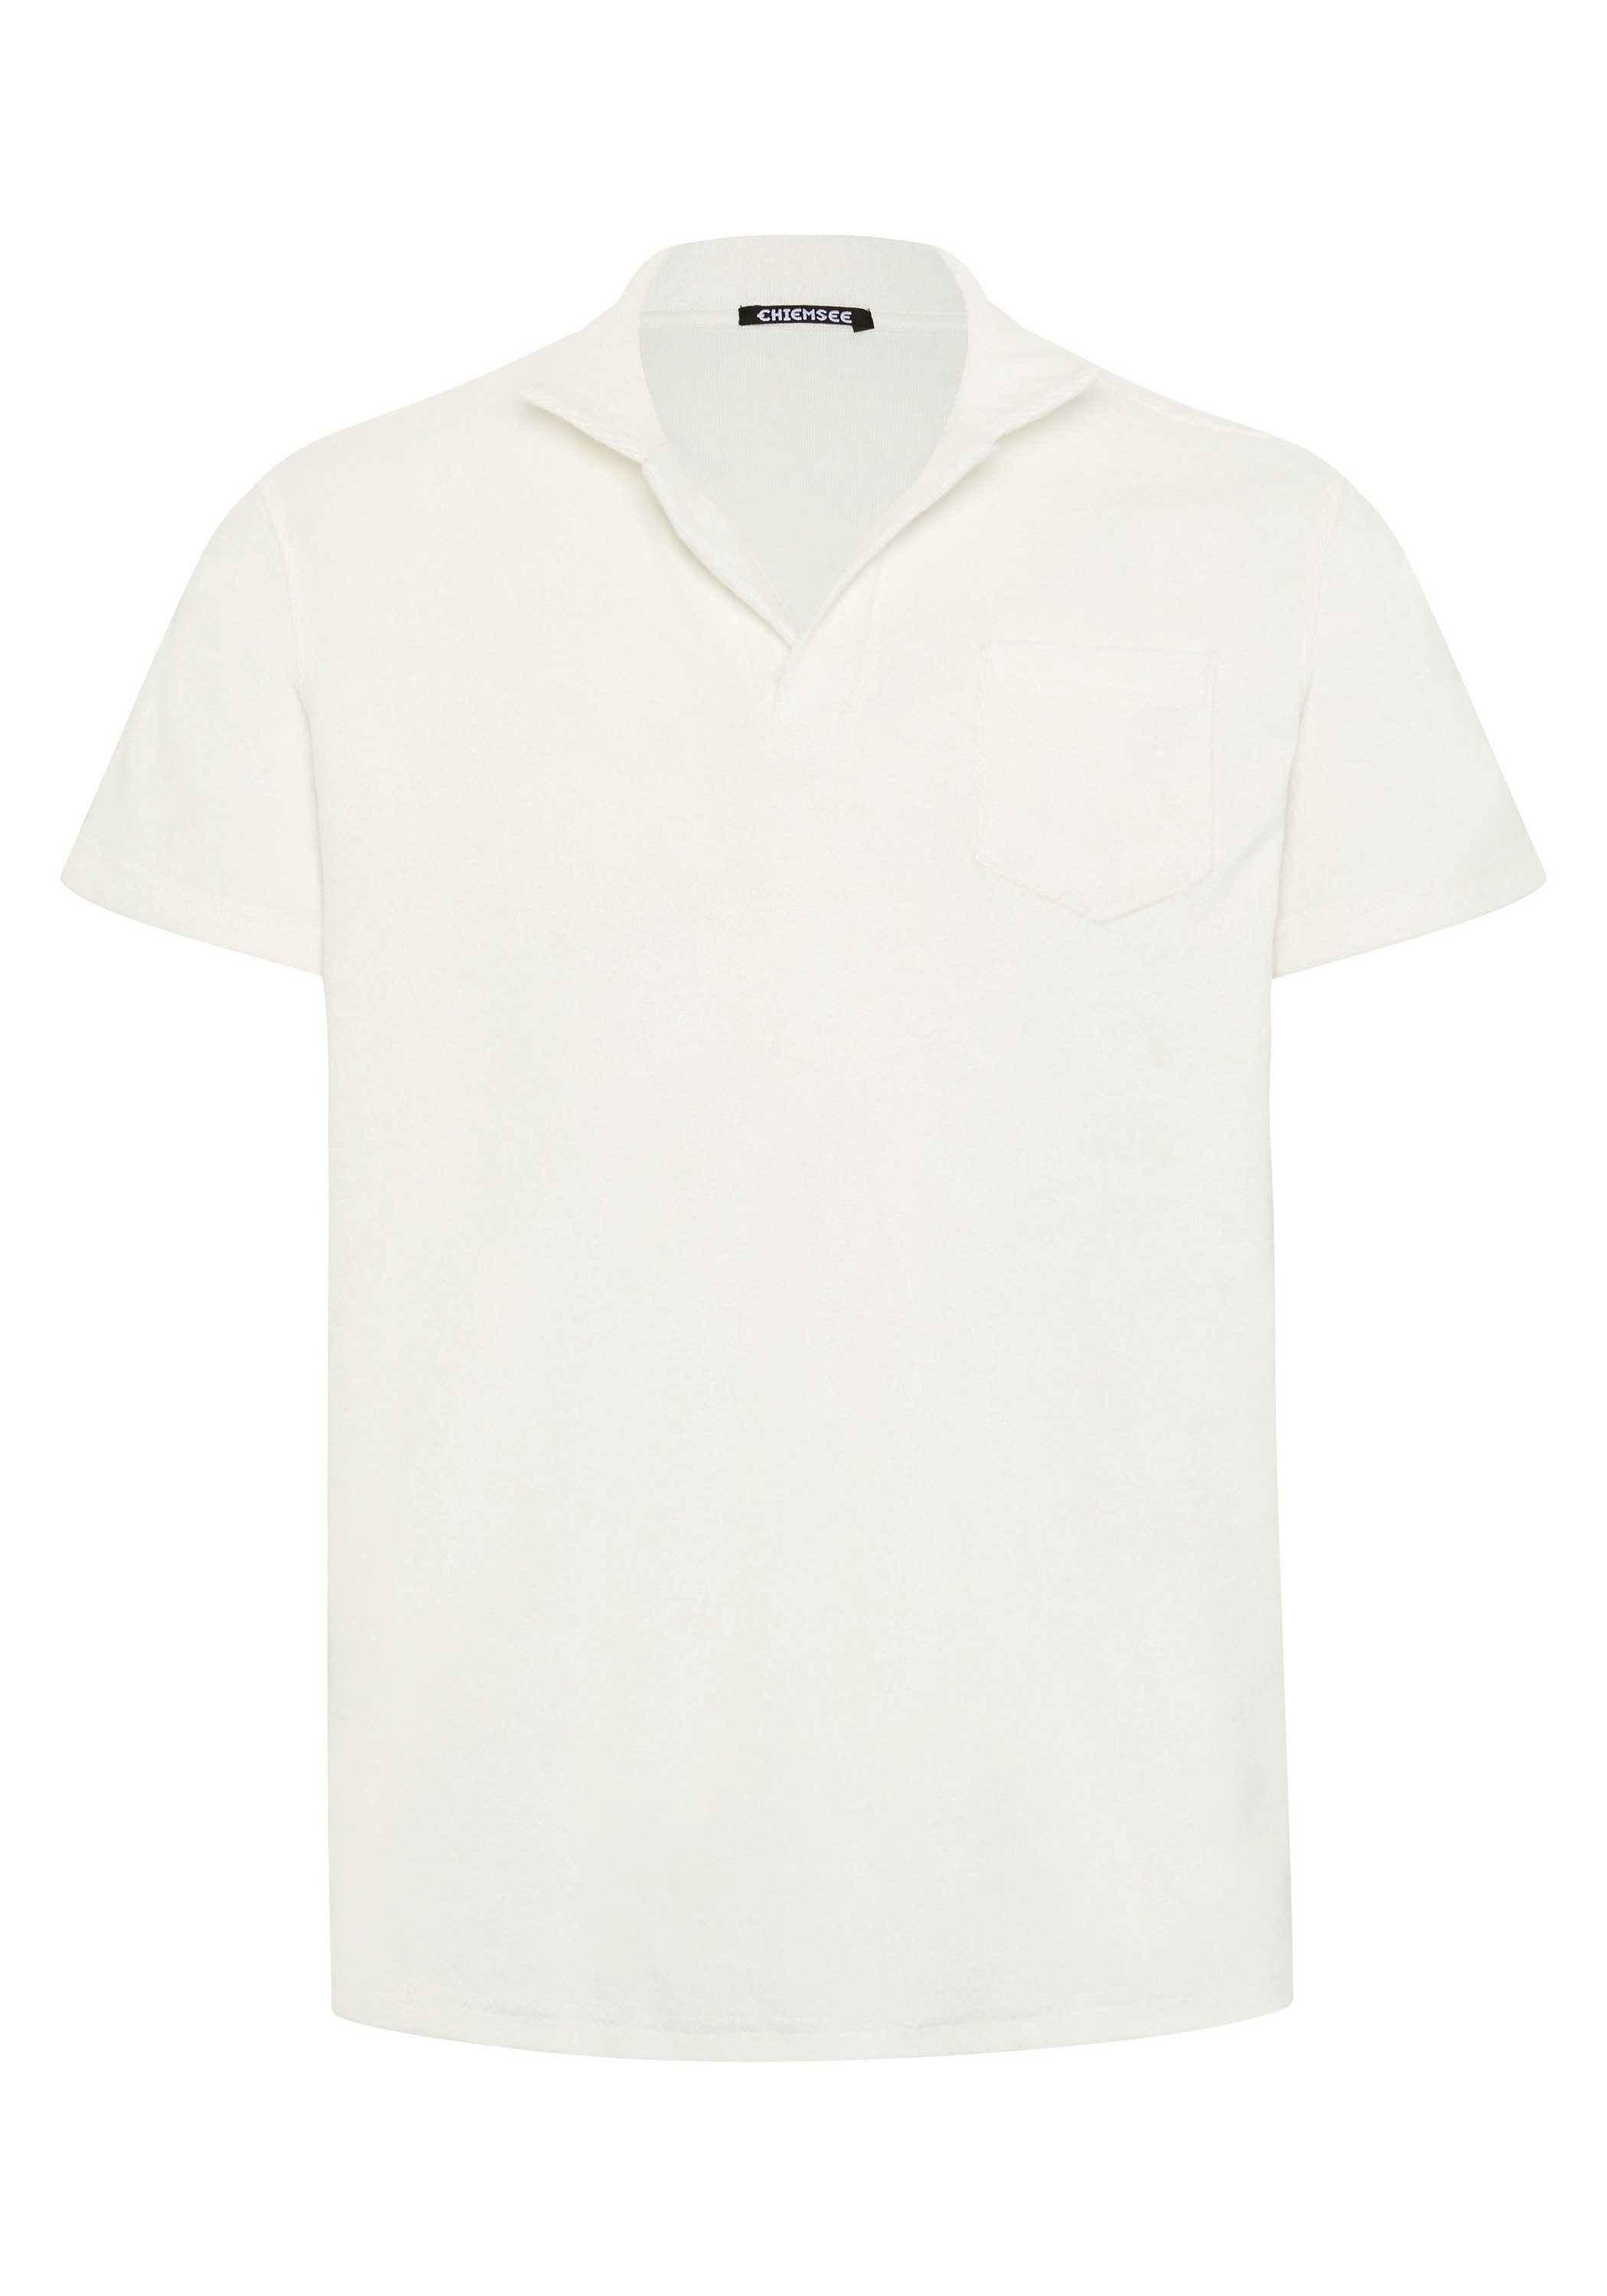 Chiemsee Poloshirt Poloshirt im modernen Frottee-Look 1 11-4202 Star White